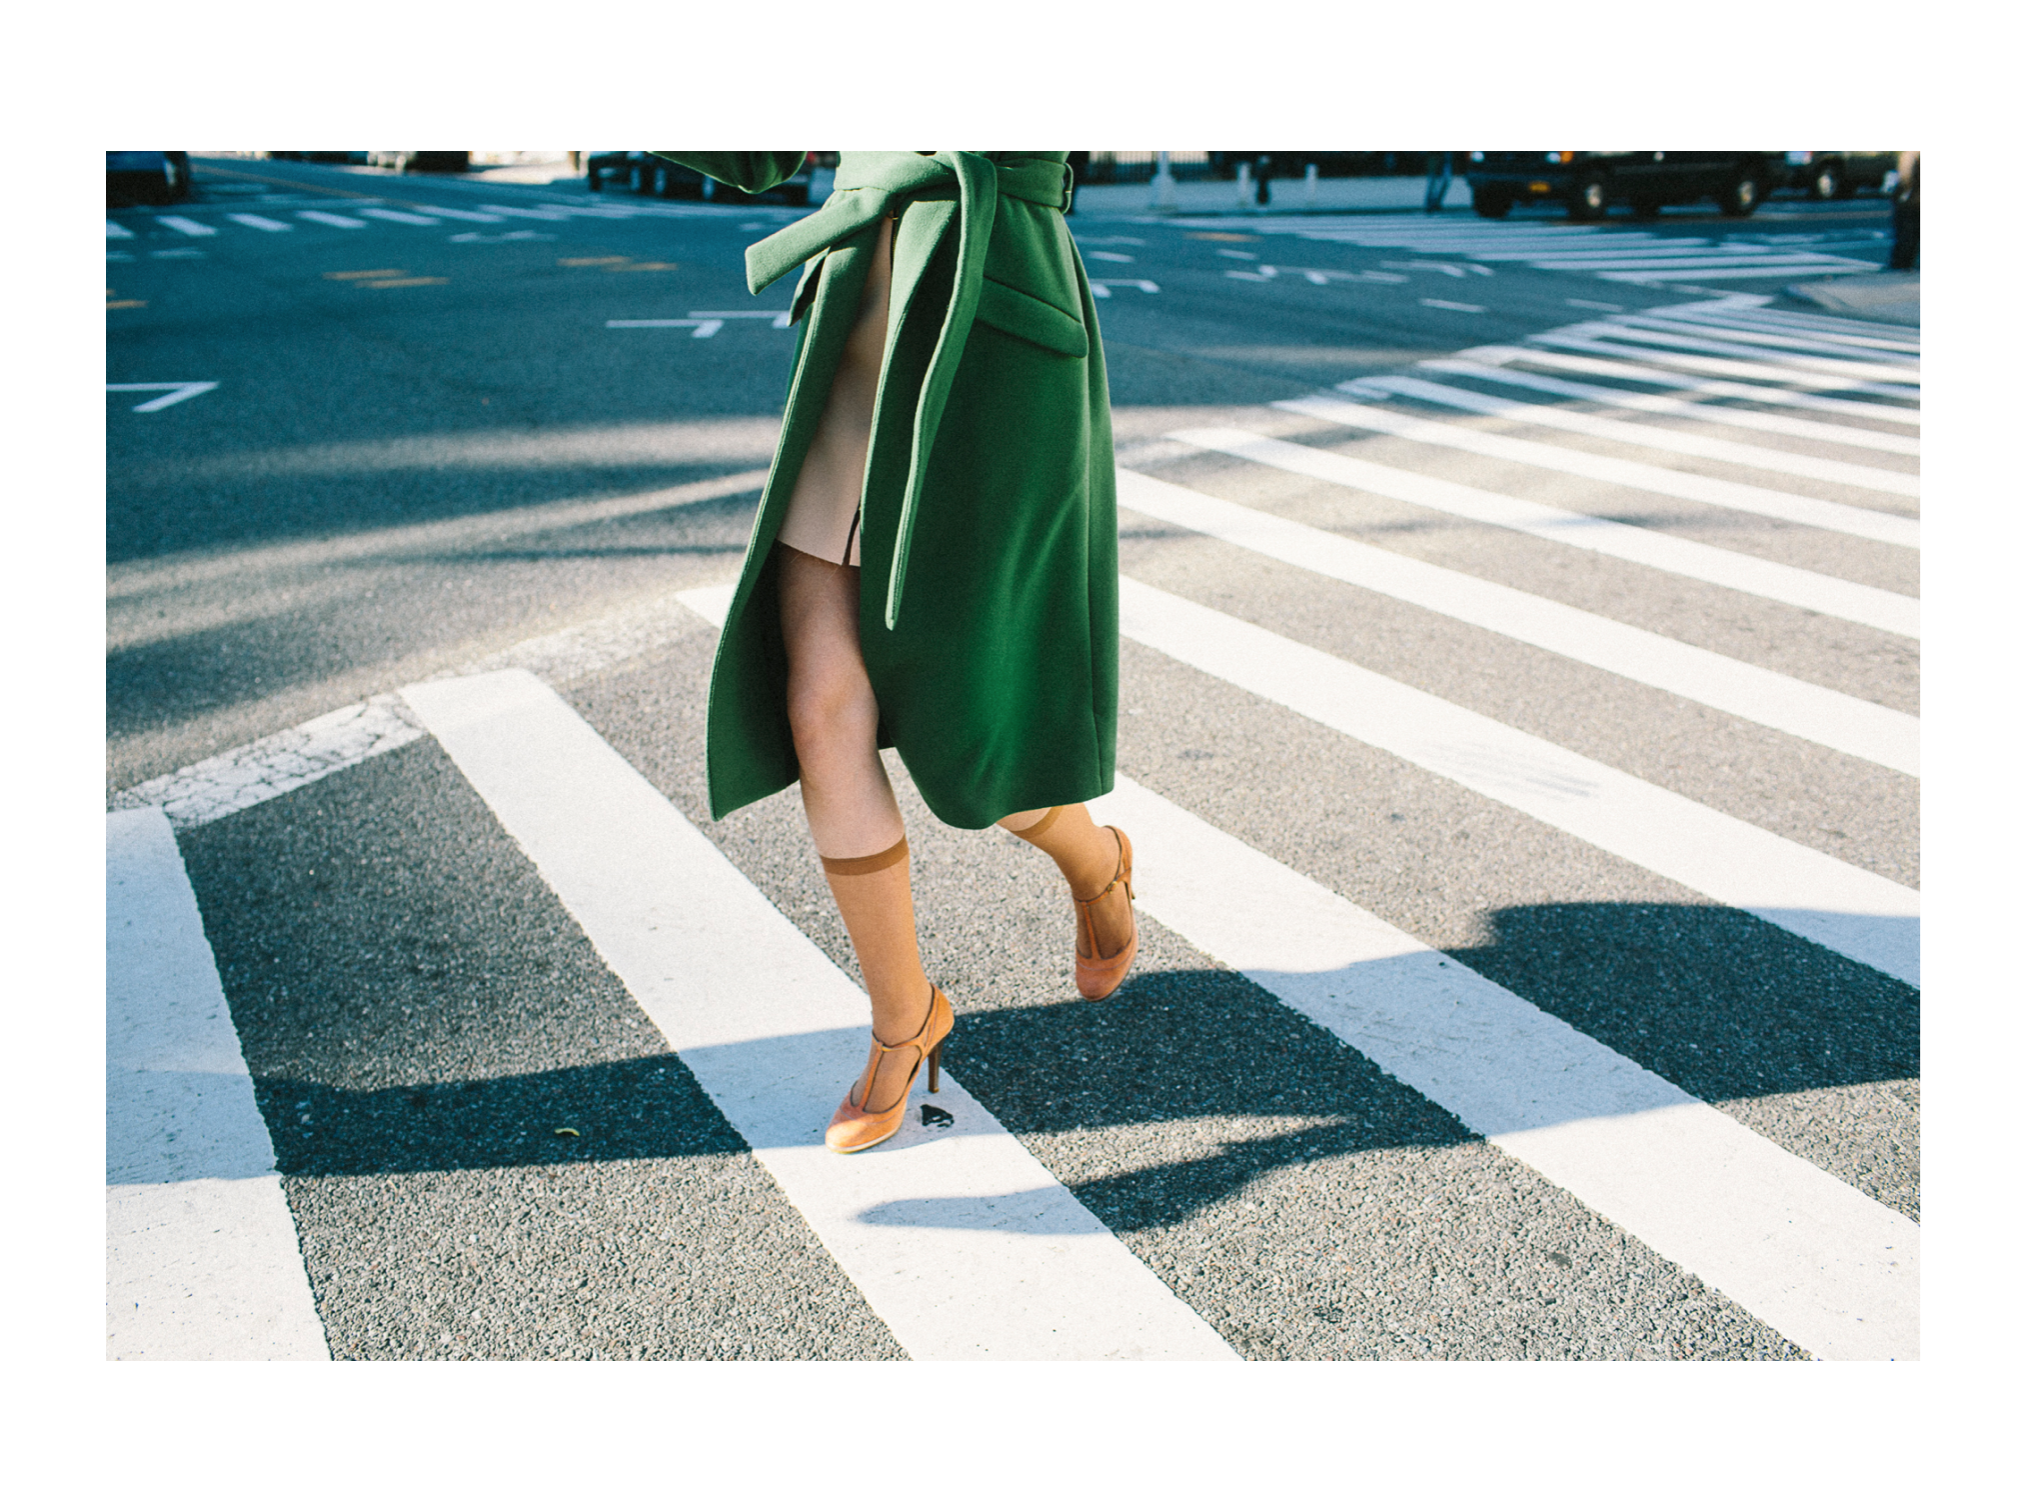 EMILYWINIKER_2019_LEGS-CROSSING-STREET.png